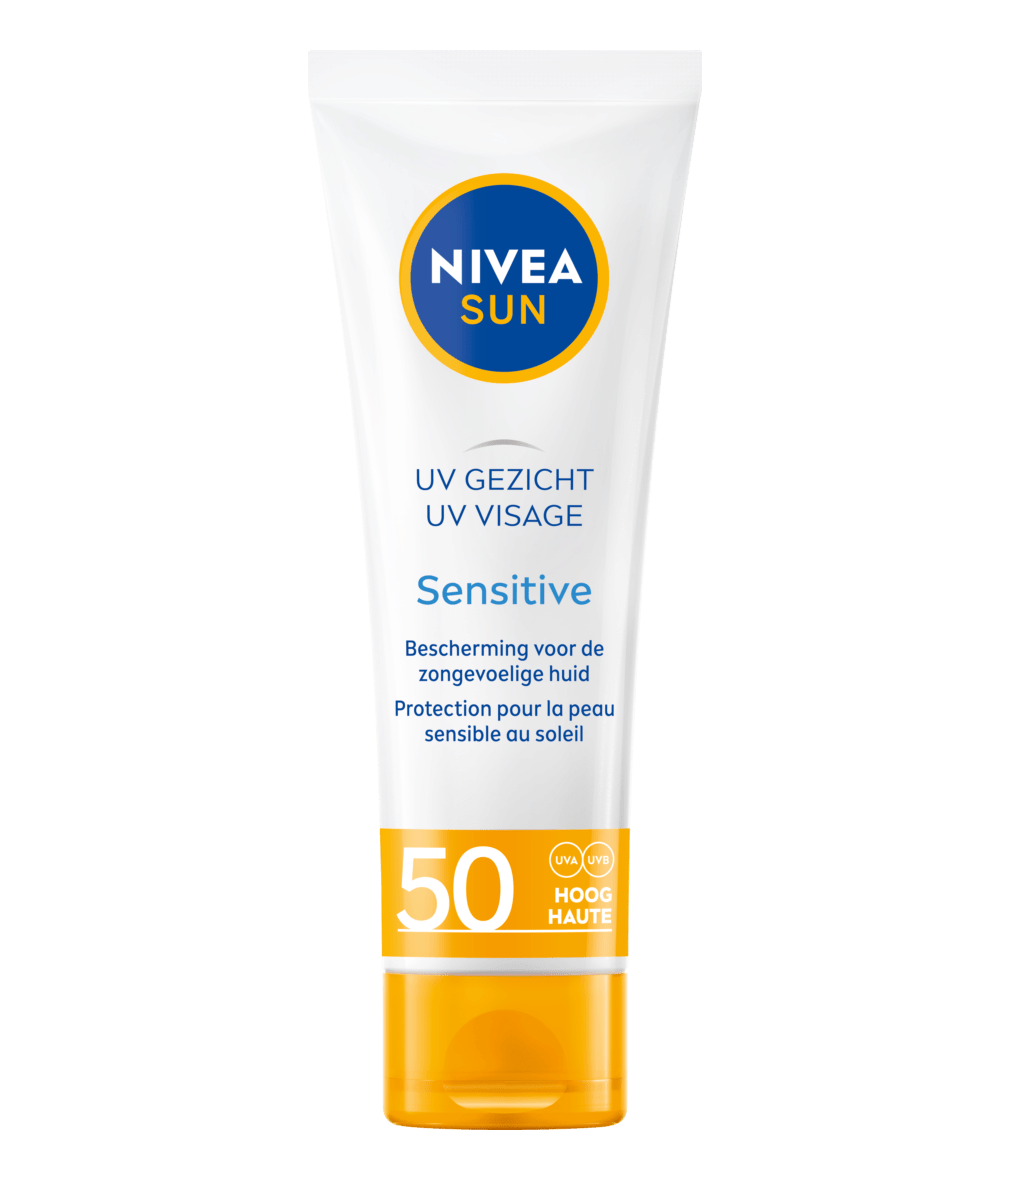 Sensitive UV Gevoelig SPF 50 | NIVEA SUN